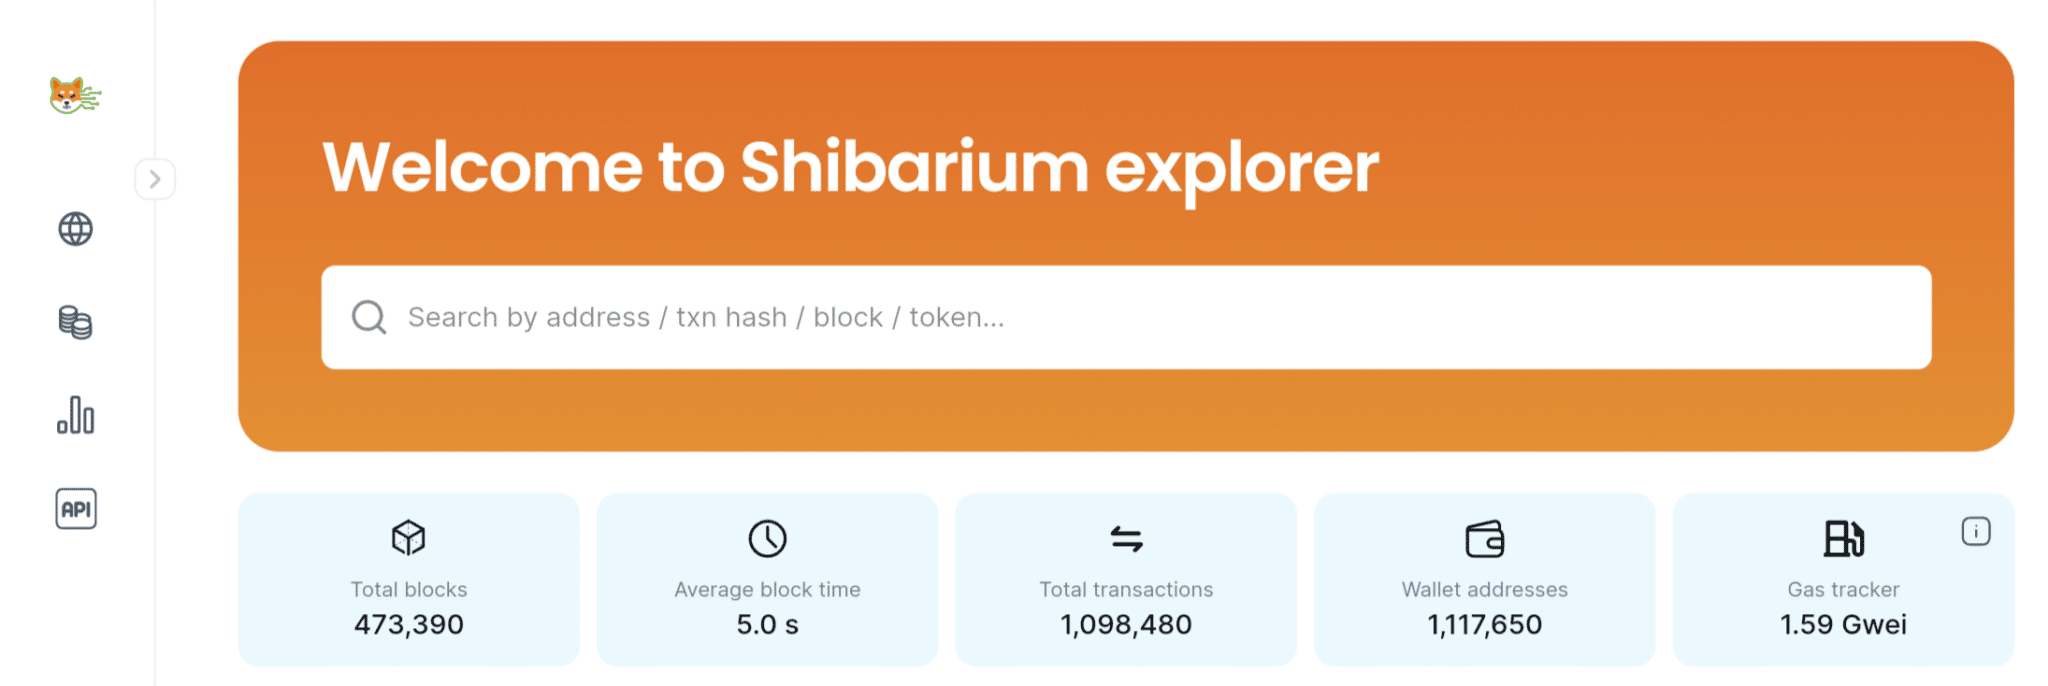 Shibarium stats 2